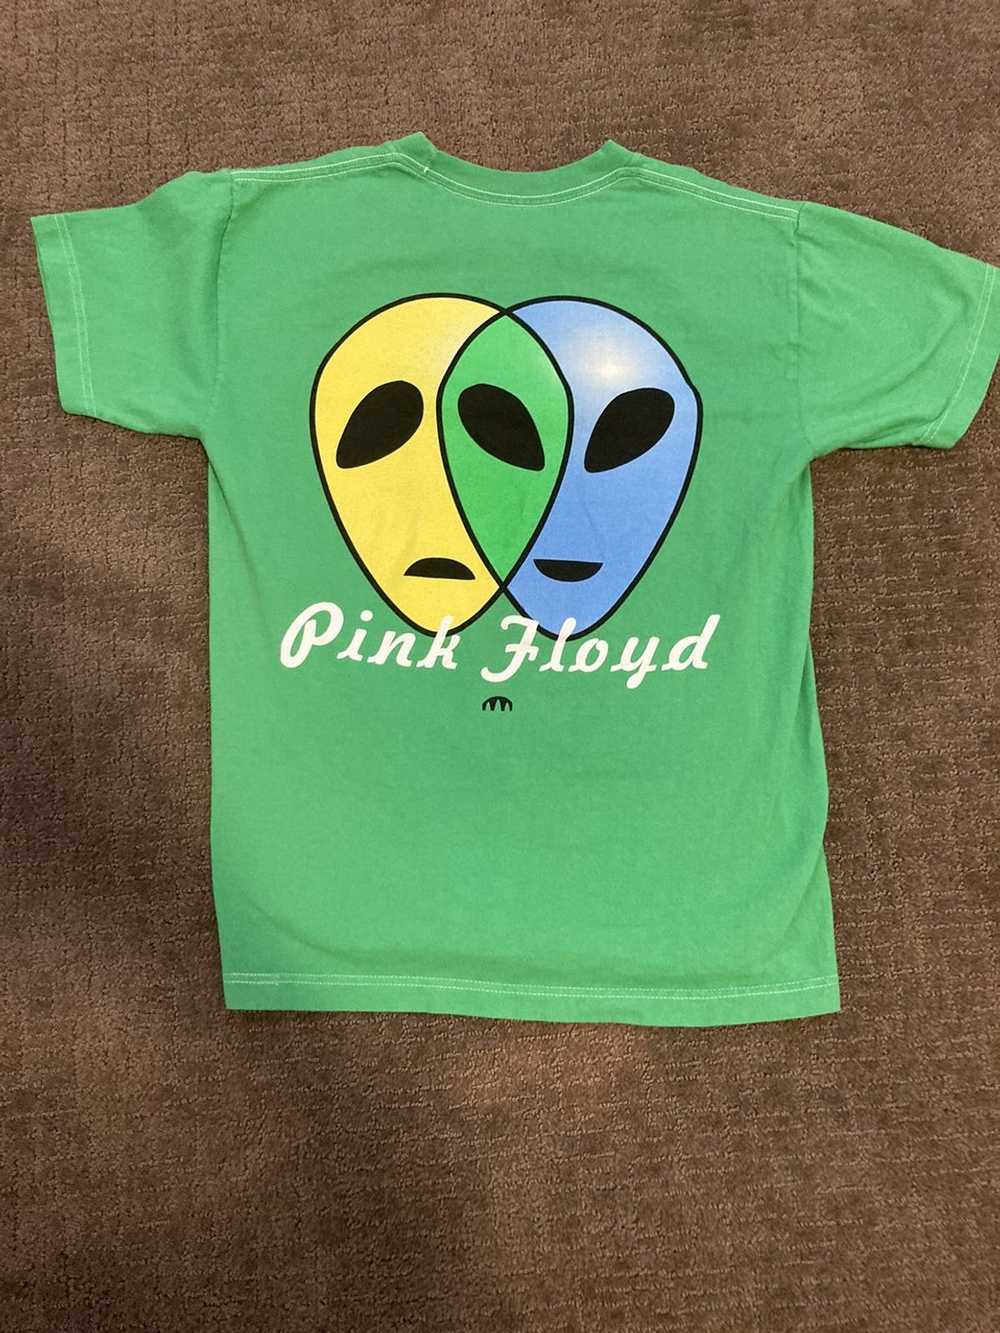 Pink Floyd Pink Floyd T shirt - image 3